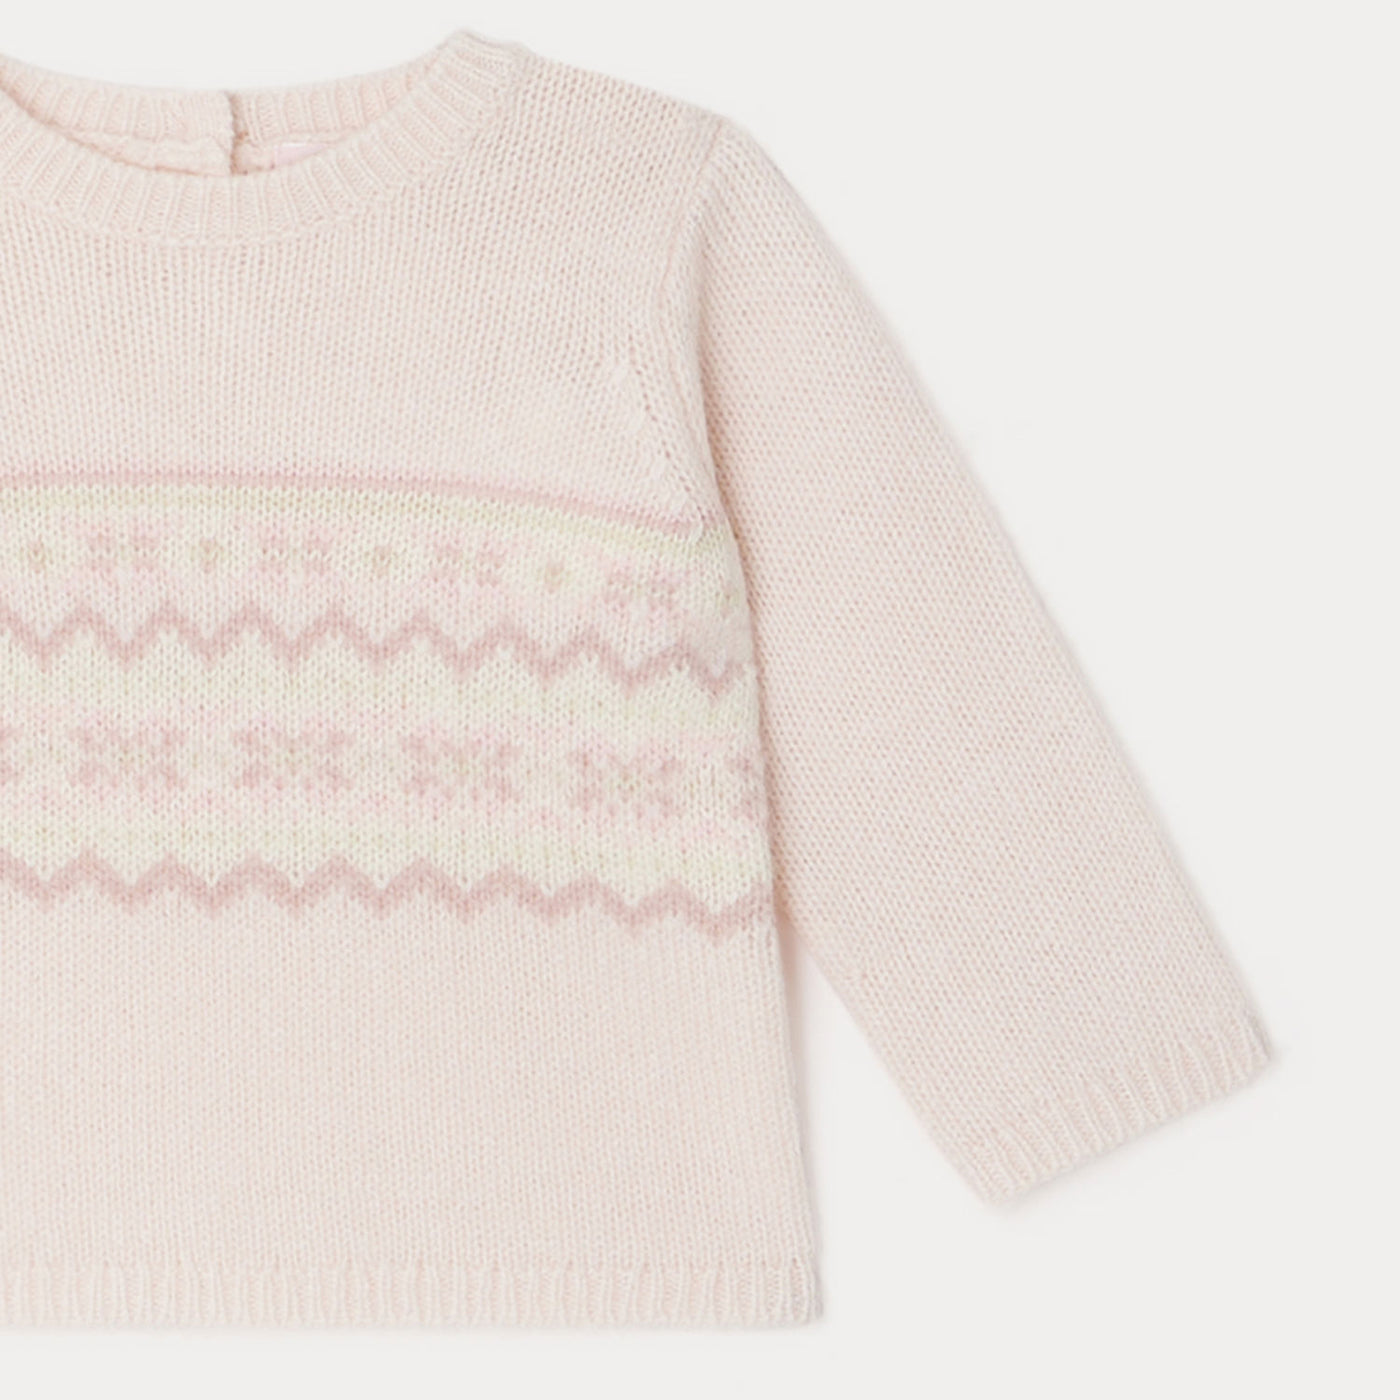 Thiane Sweater multicolor pink